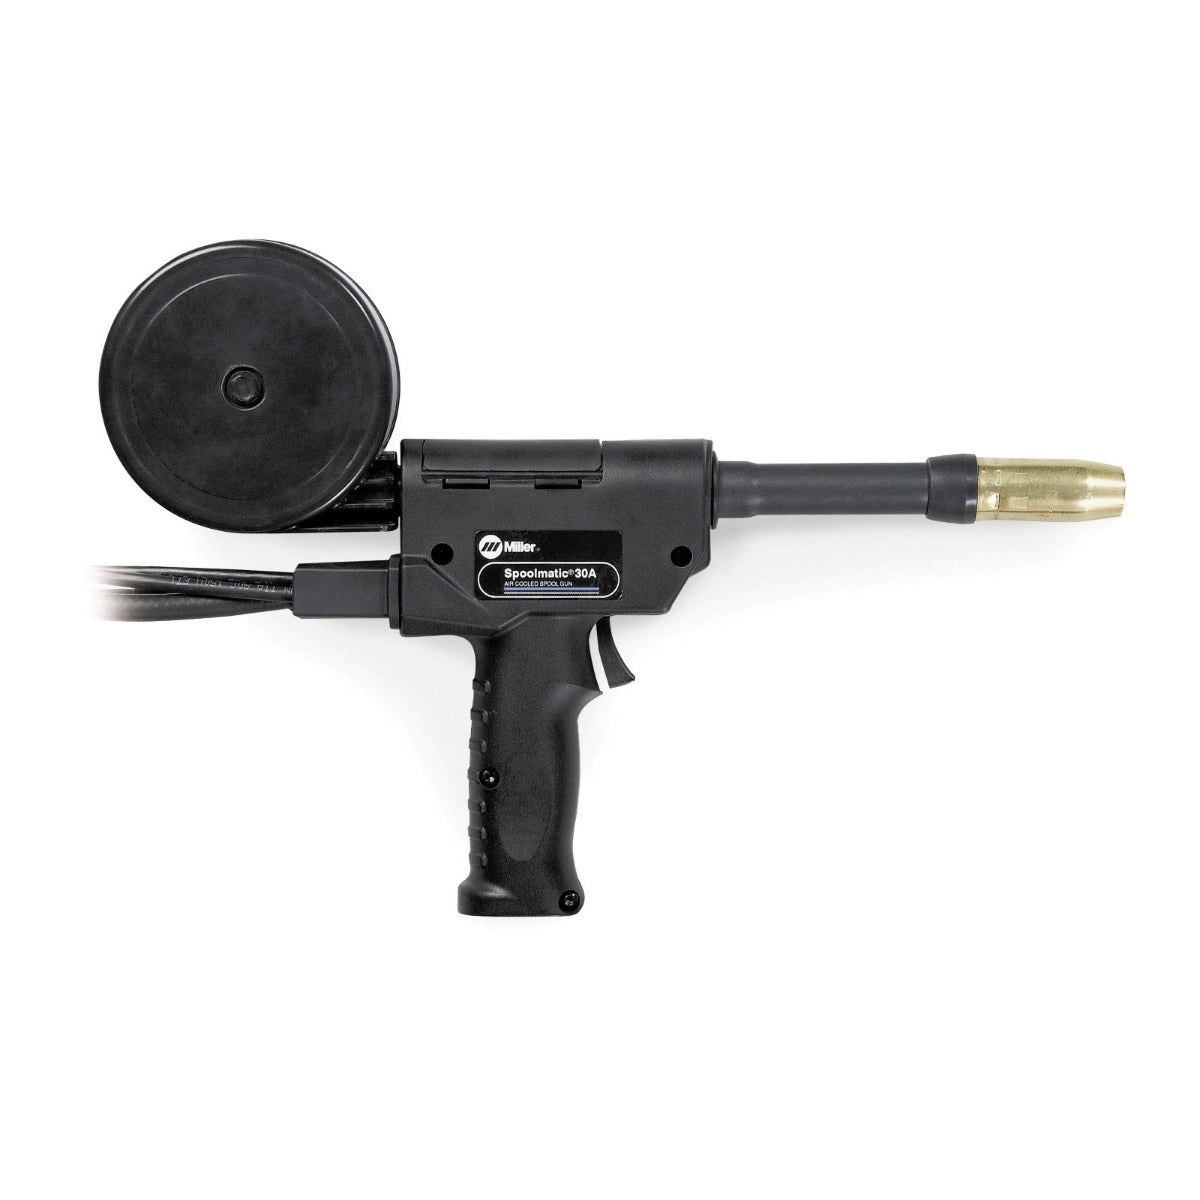 Miller Spoolmatic 30A MIG Spool Gun (130831)